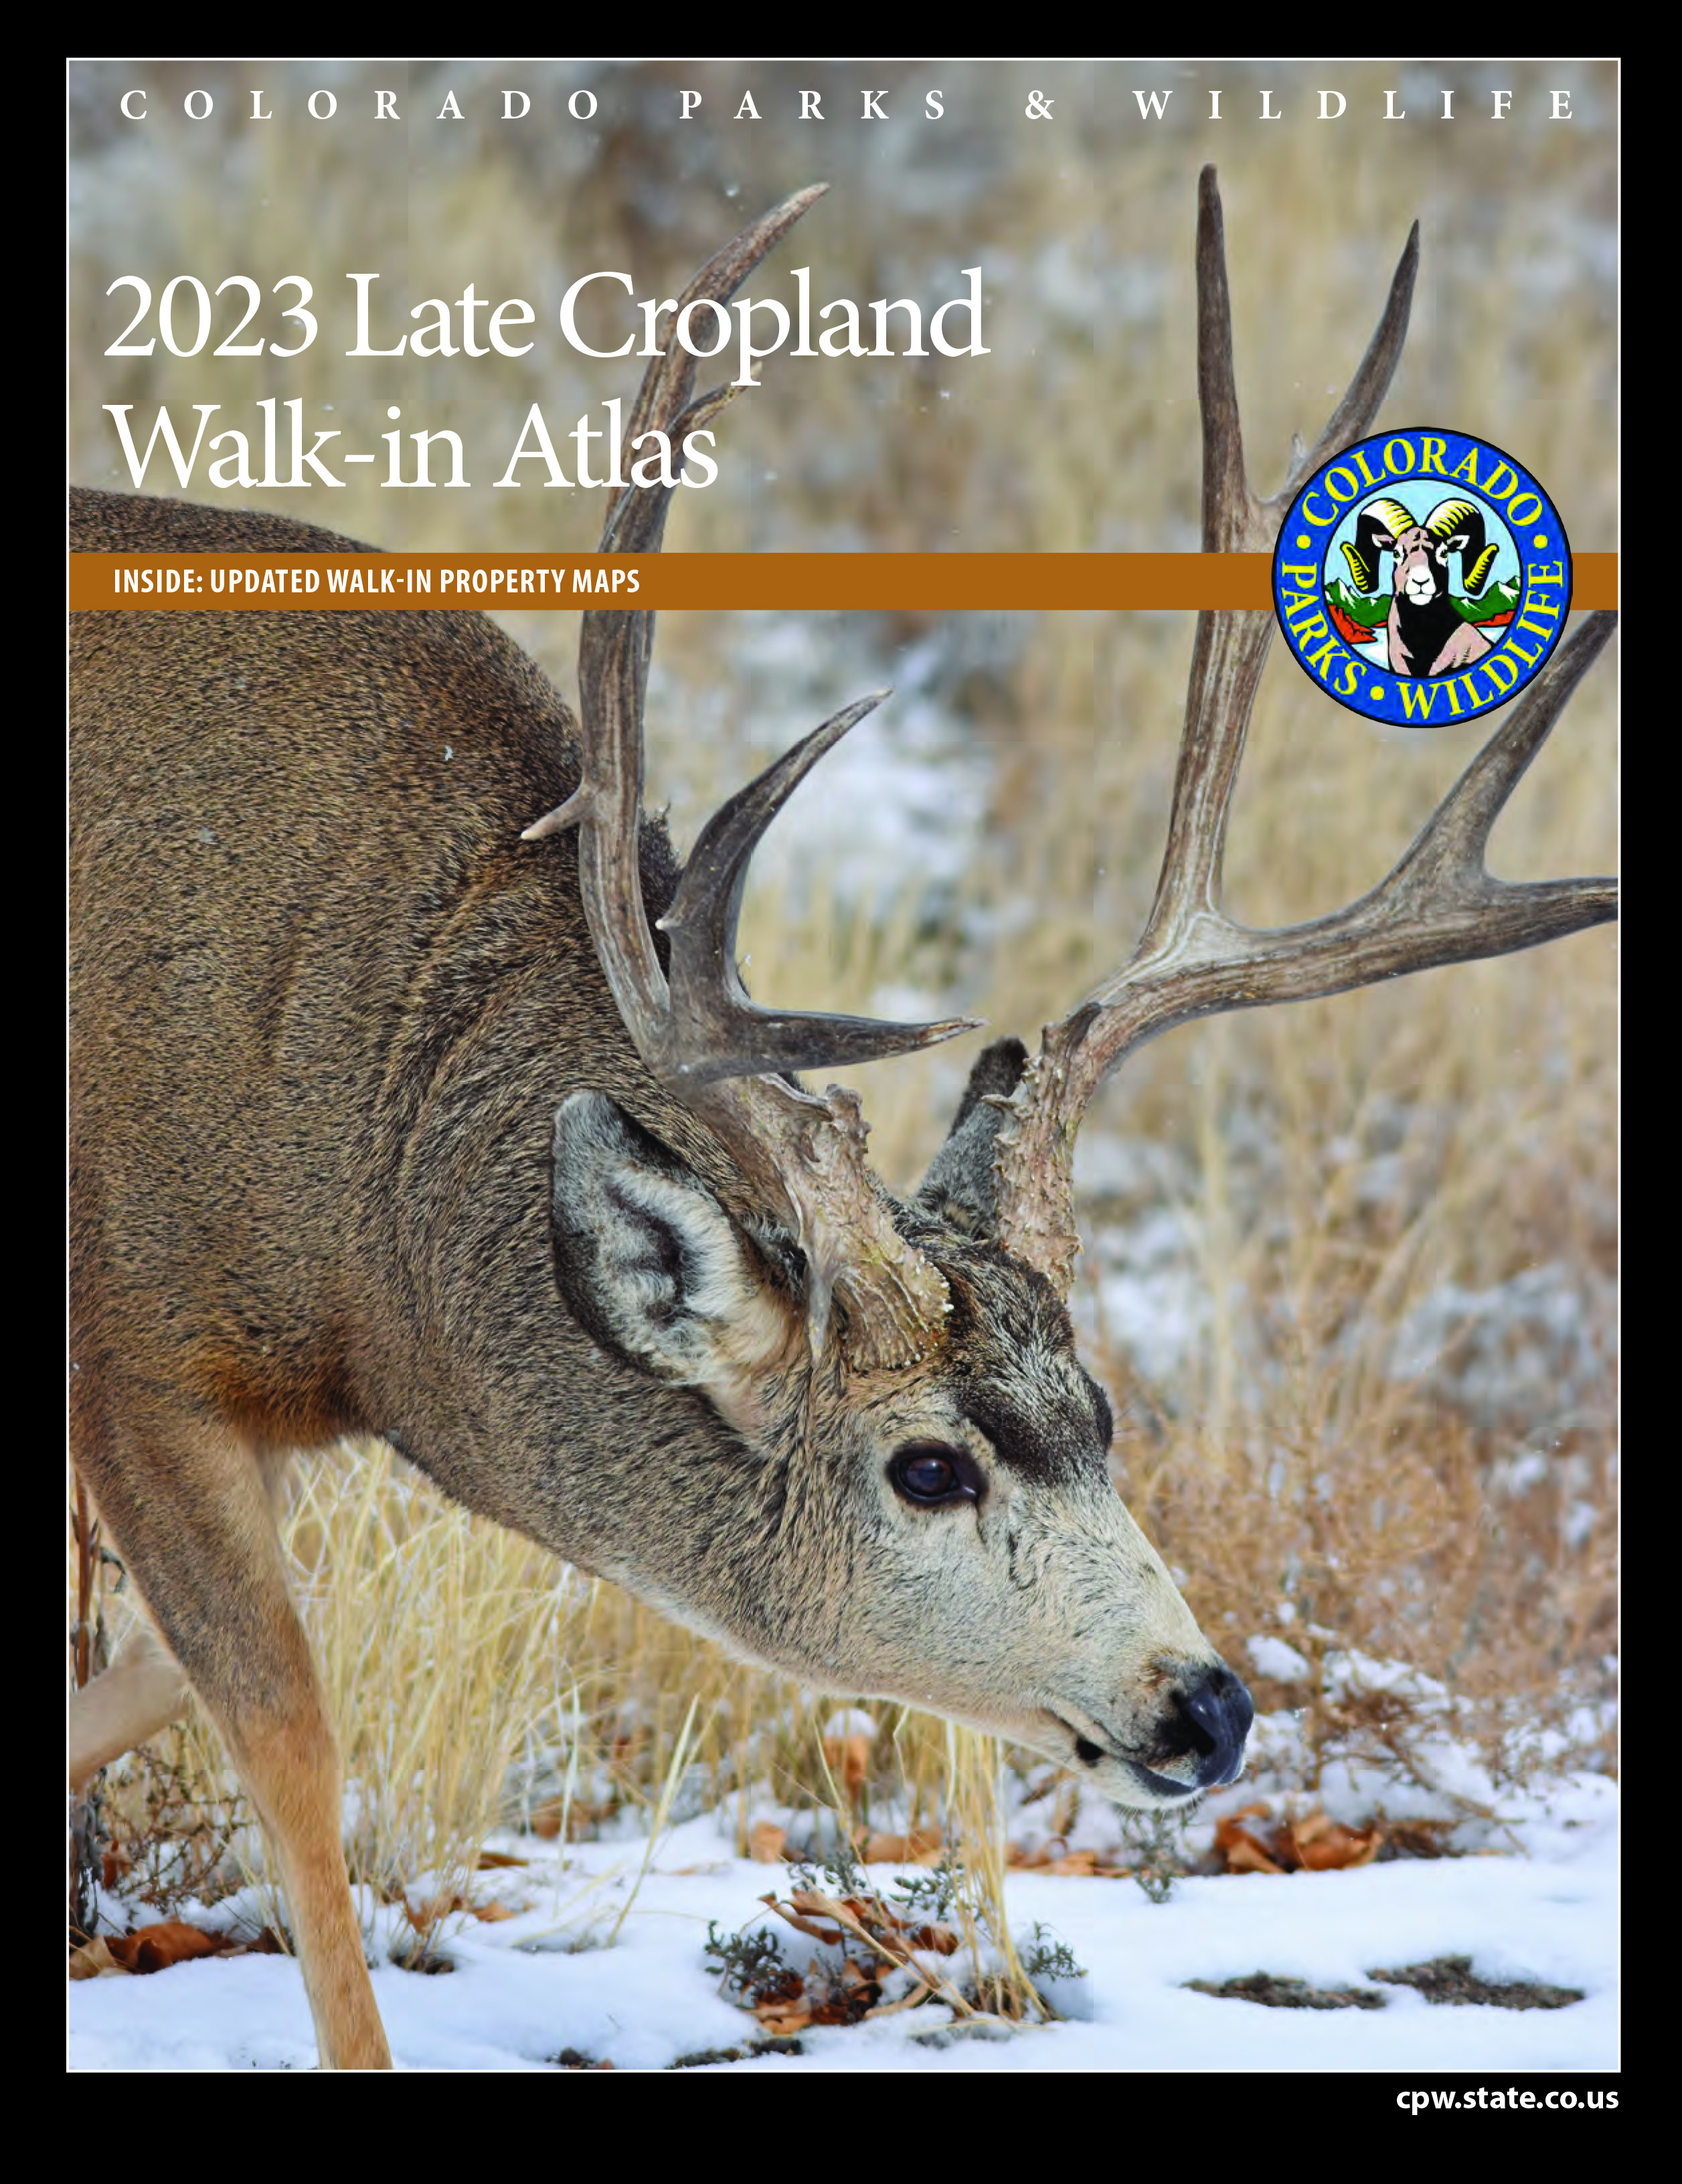 Late Cropland Walk-In Atlas Brochure Cover